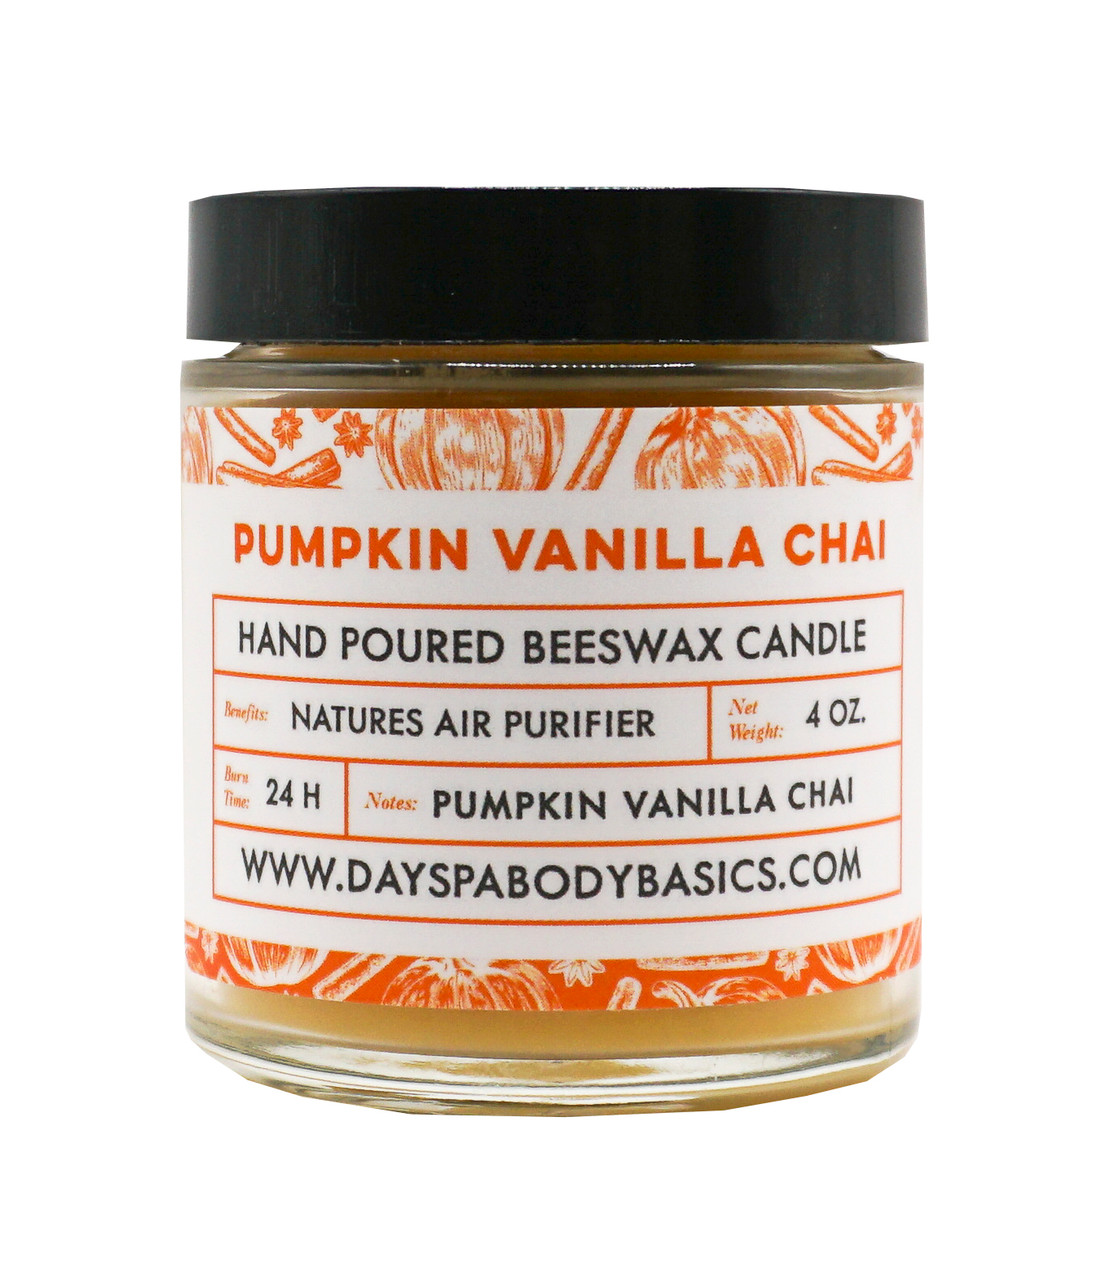 Pumpkin Vanilla Chai Beeswax Candle 